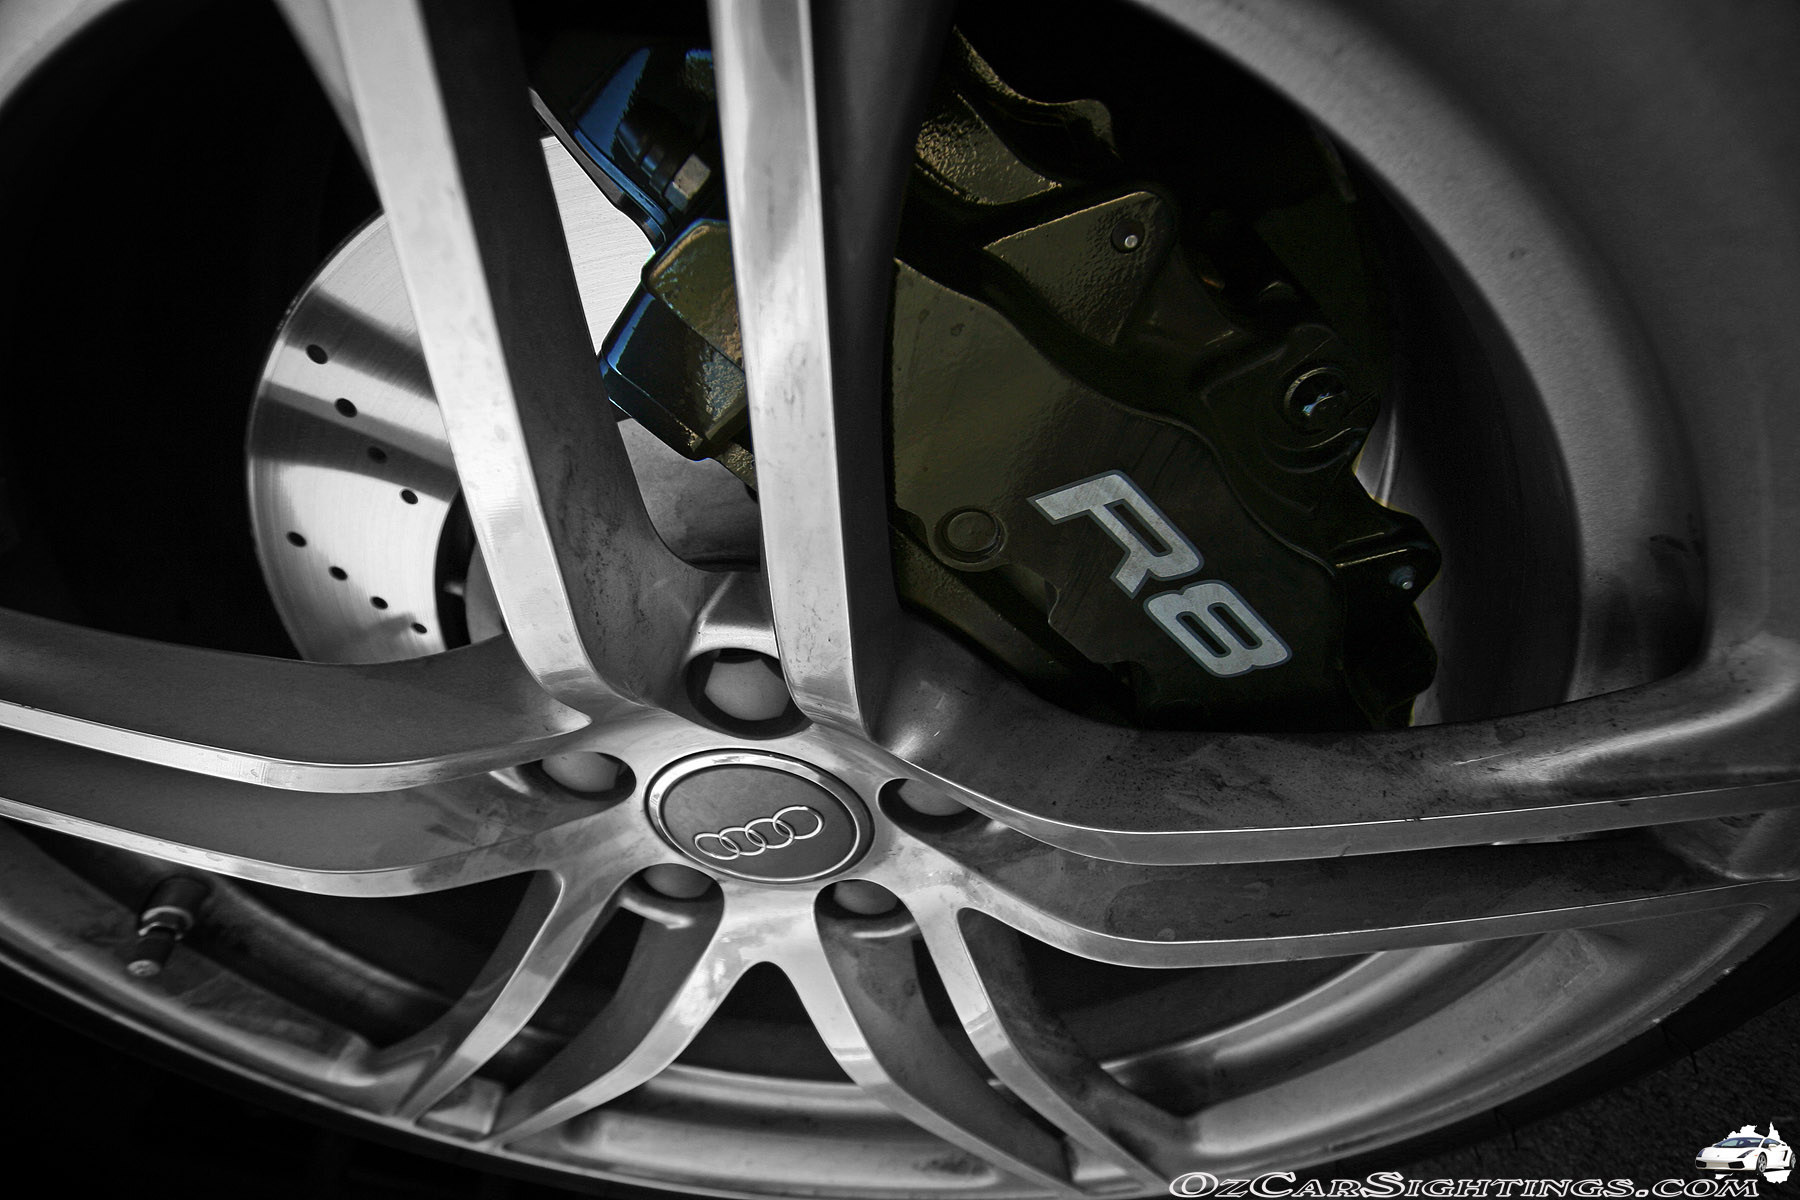 General 1800x1200 car Audi R8 wheels brakes high angle Audi German cars Volkswagen Group